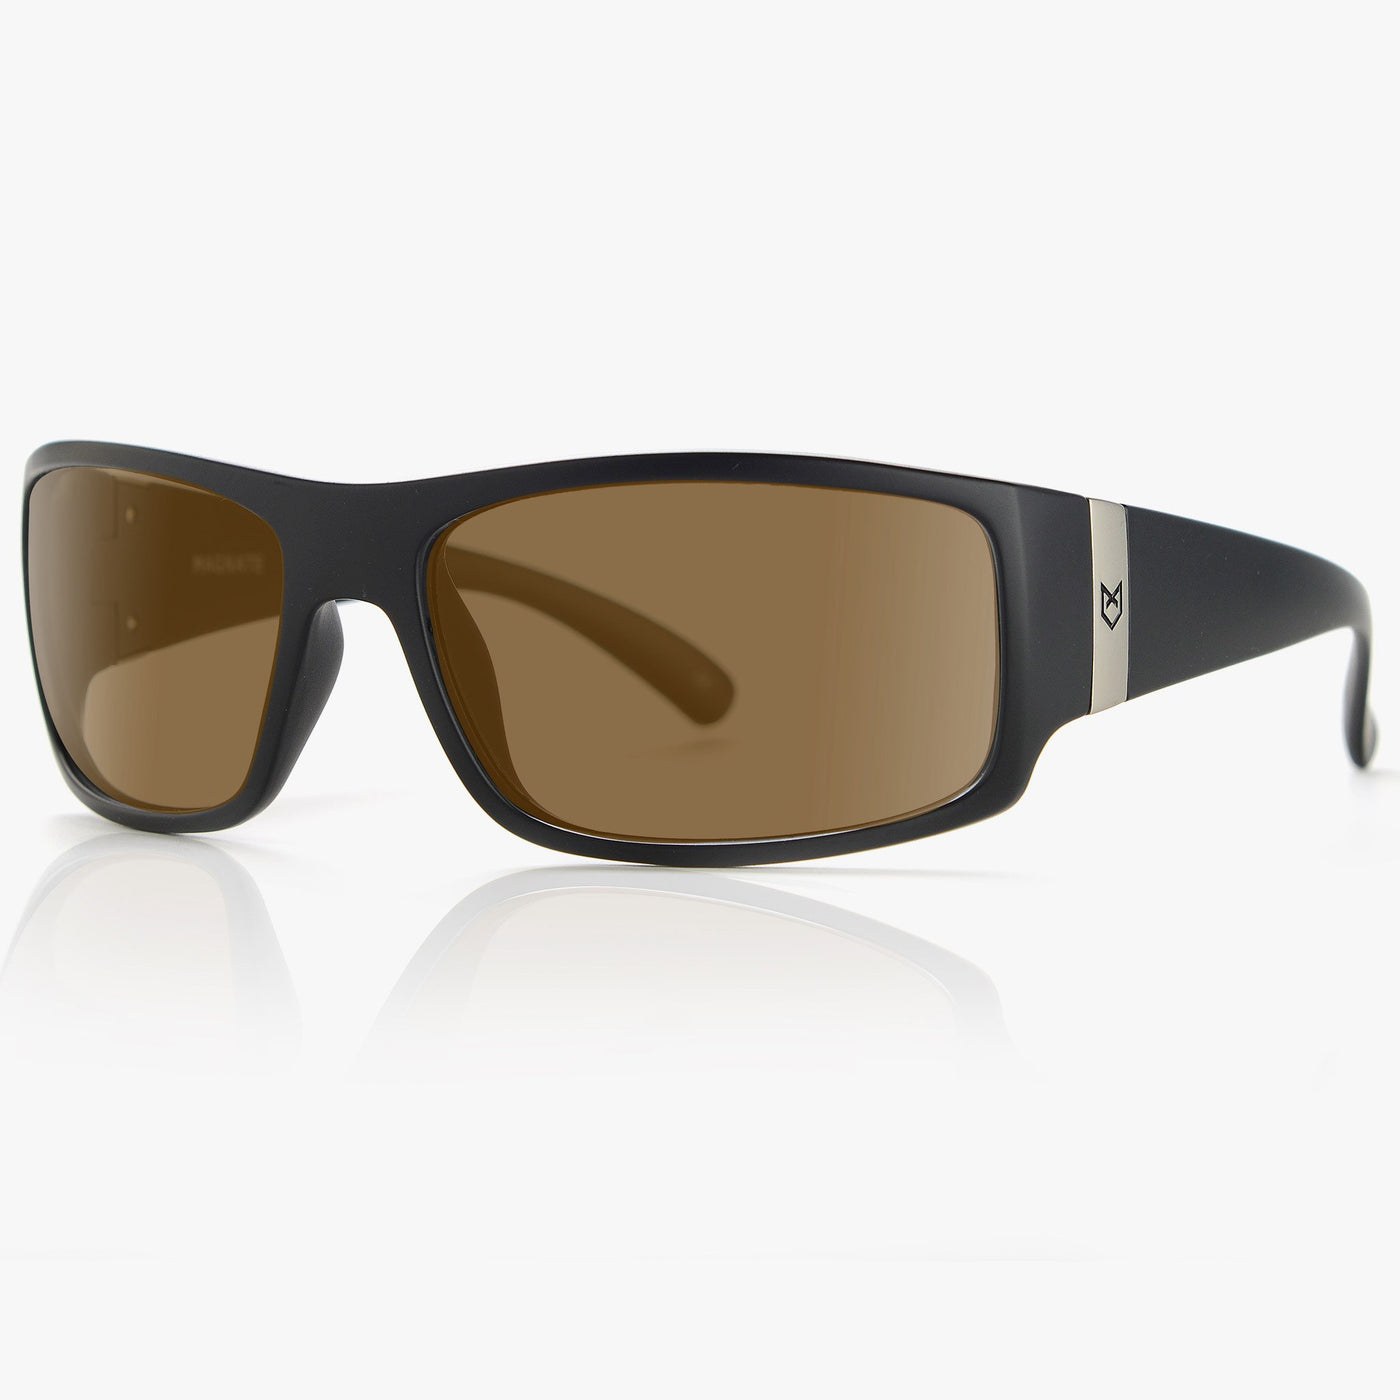 Magnate Polarized Sunglasses for Men